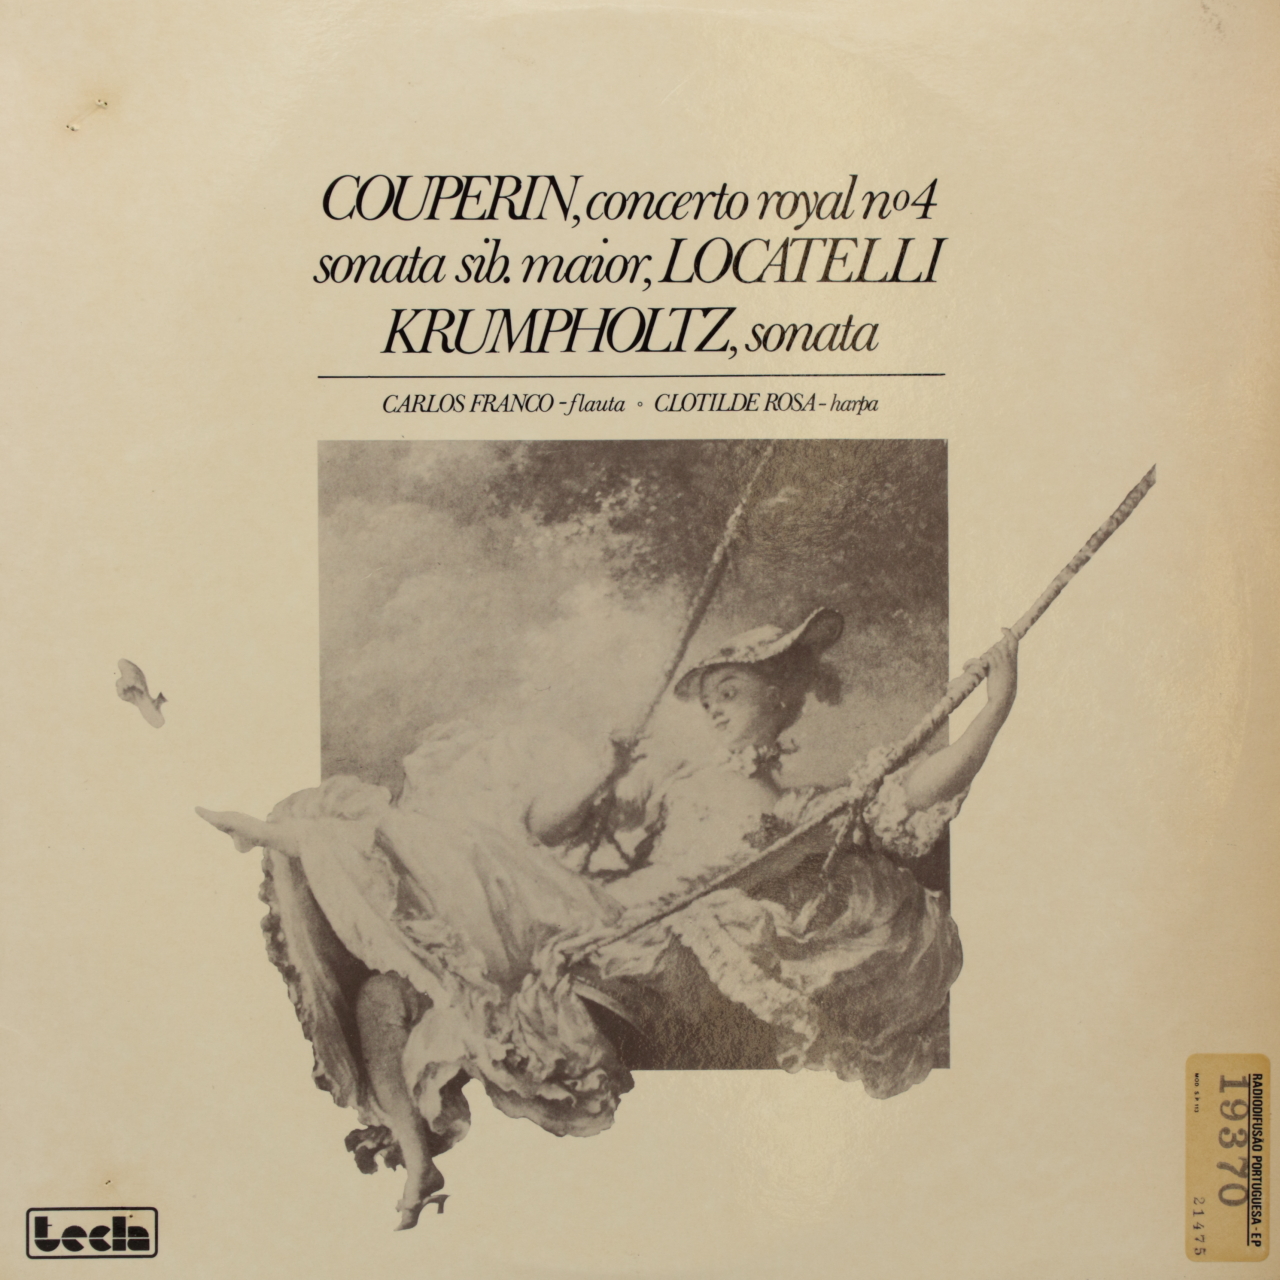 Couperin: Concerto royal nº4; / Locatelli: sonata / Krumpholz: Sonata em Si B maior